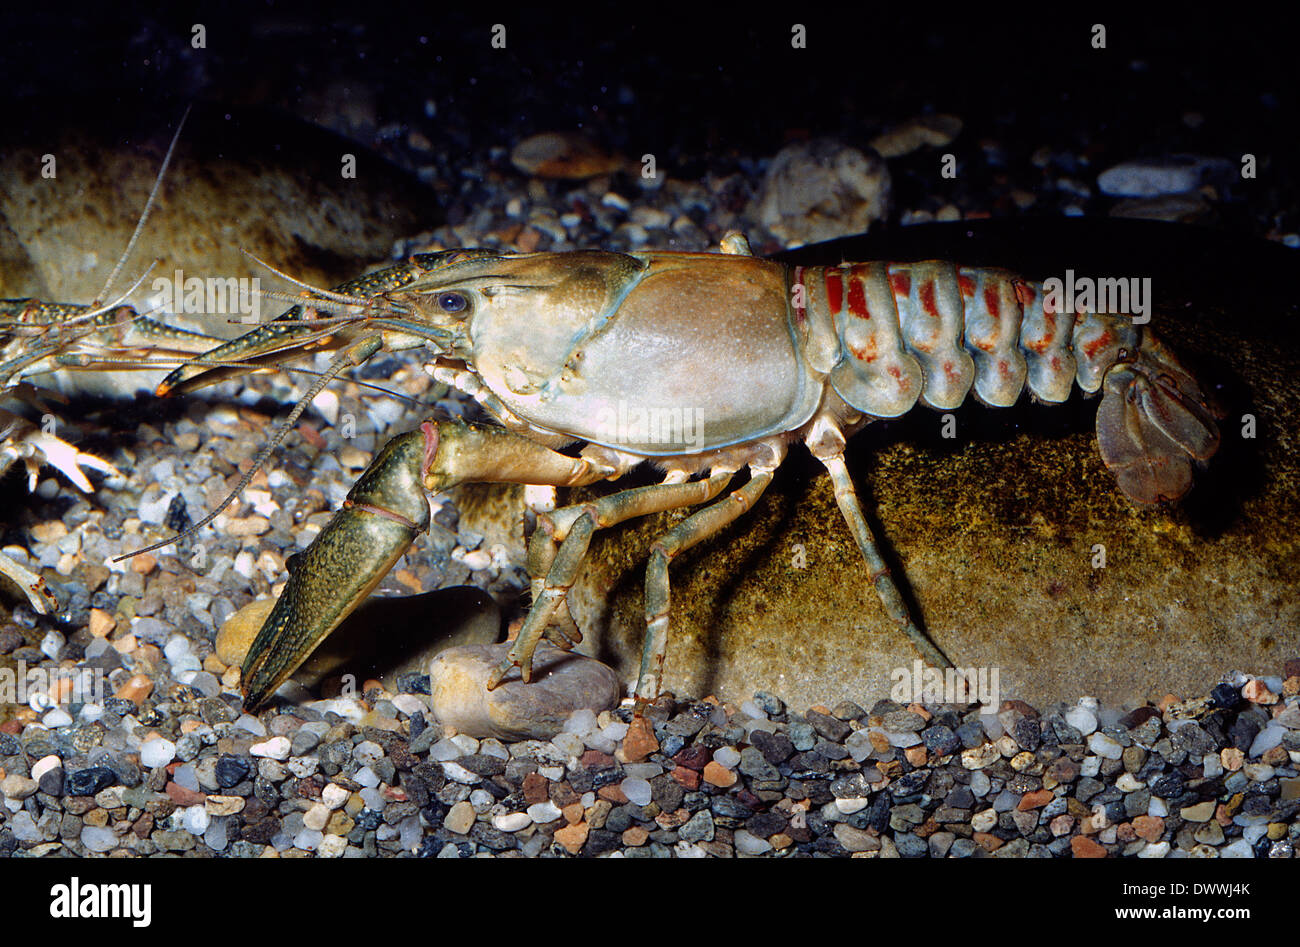 Danube crayfish Astacus leptodactylus, Astacidae, Europe, Crustacea Decapoda, Stock Photo